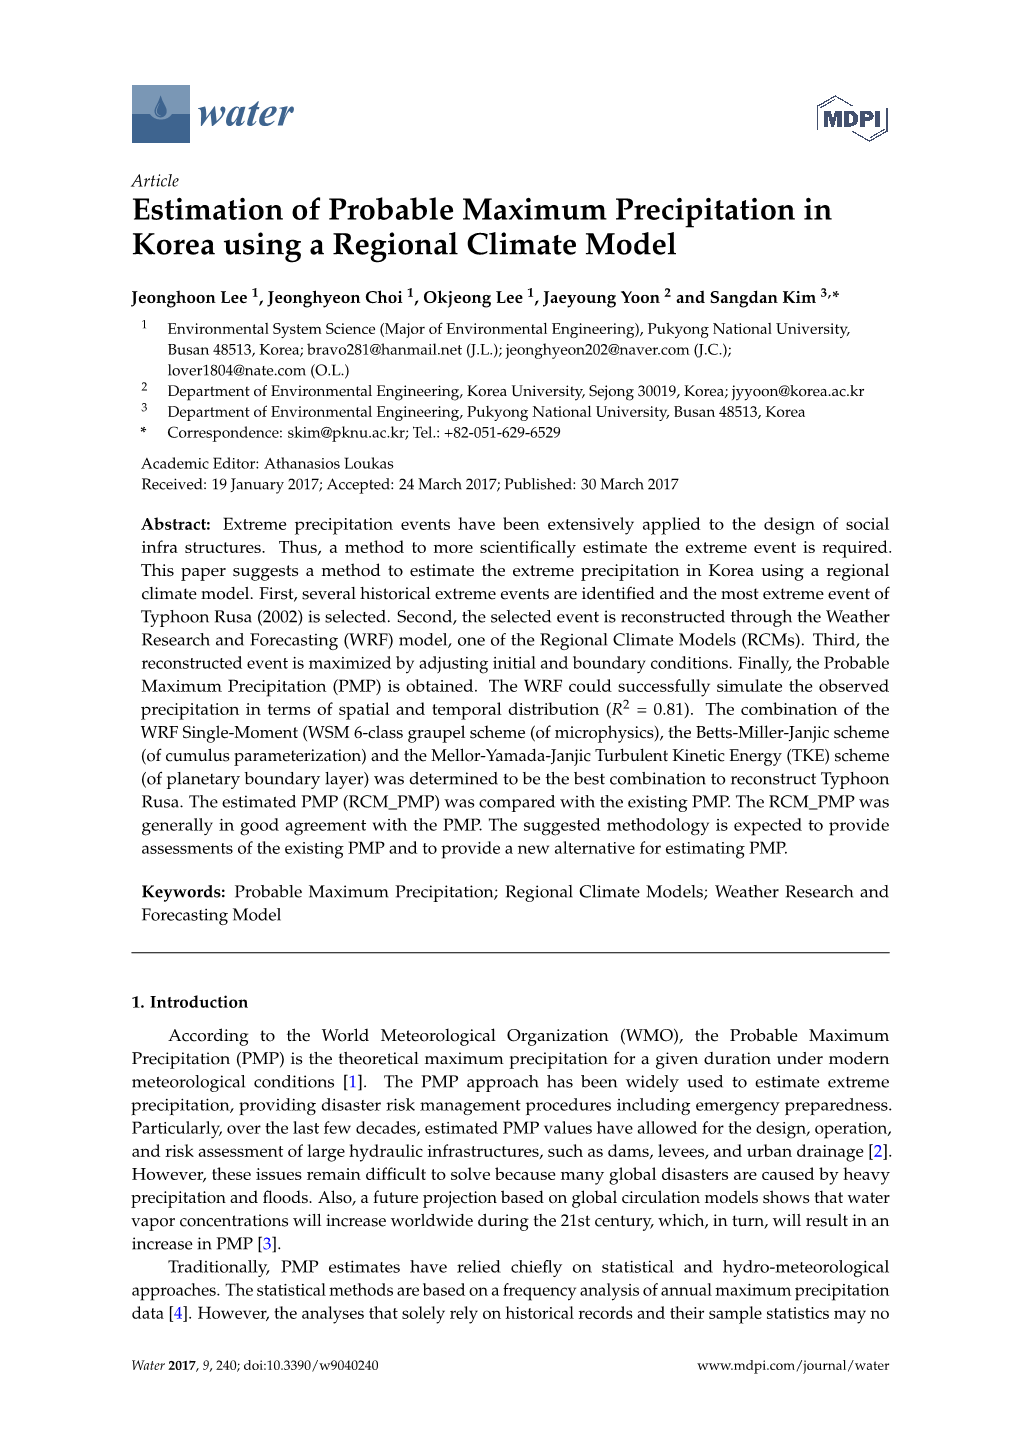 Estimation of Probable Maximum Precipitation in Korea Using a Regional Climate Model